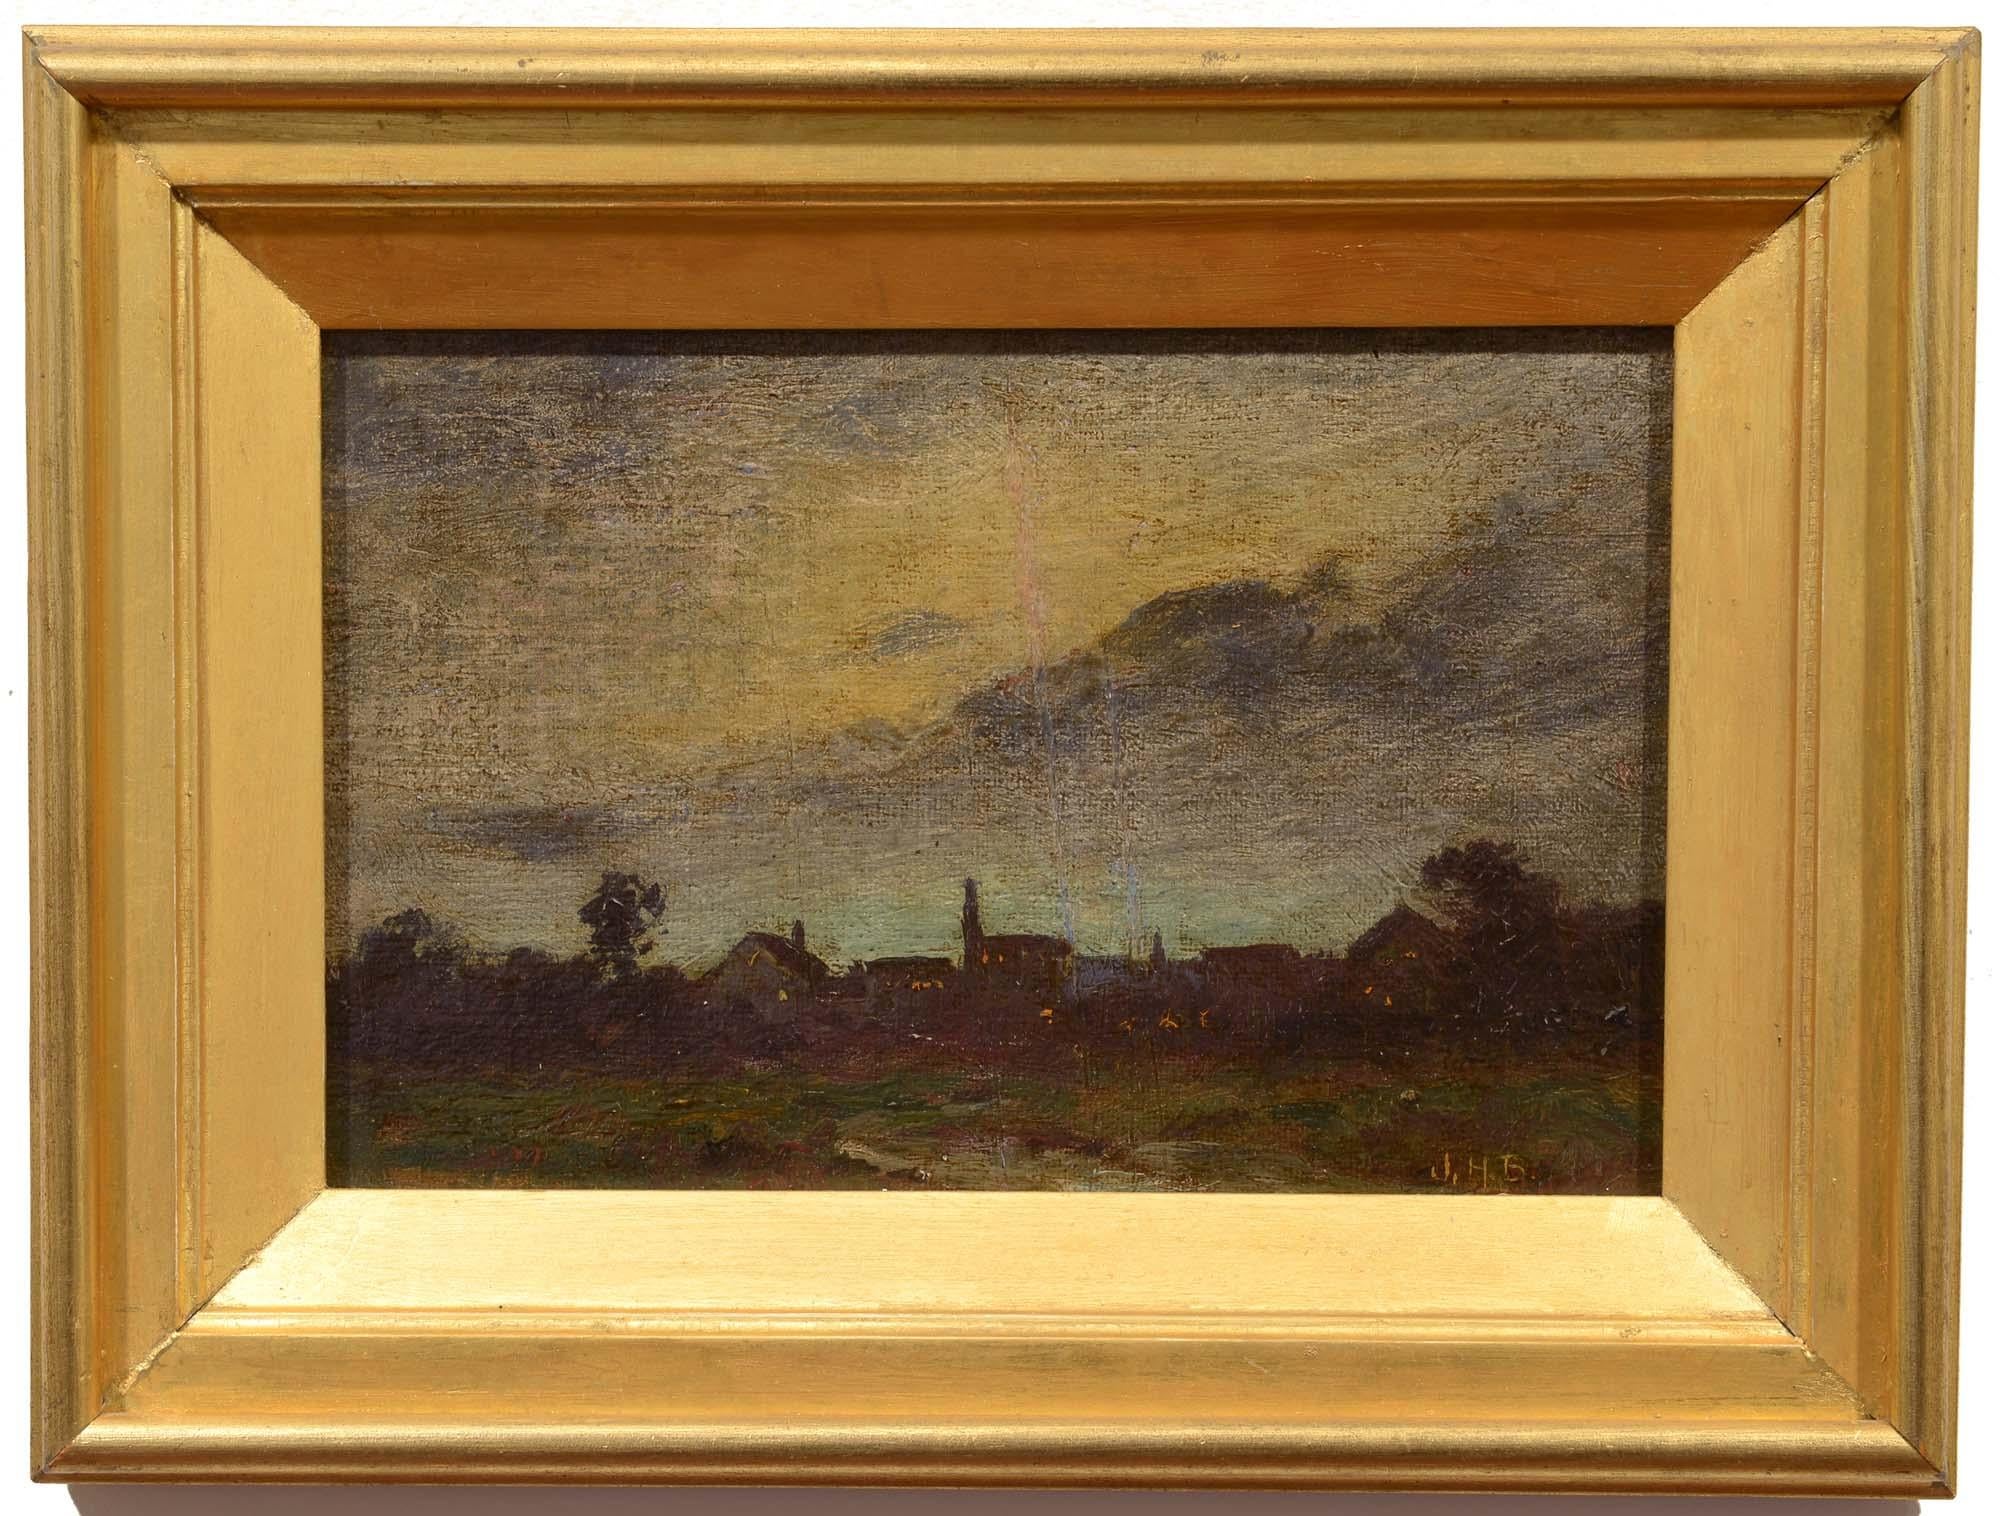 Village at Night, Joseph Henry Boston, Impressionist - Painting by John Henry Boston